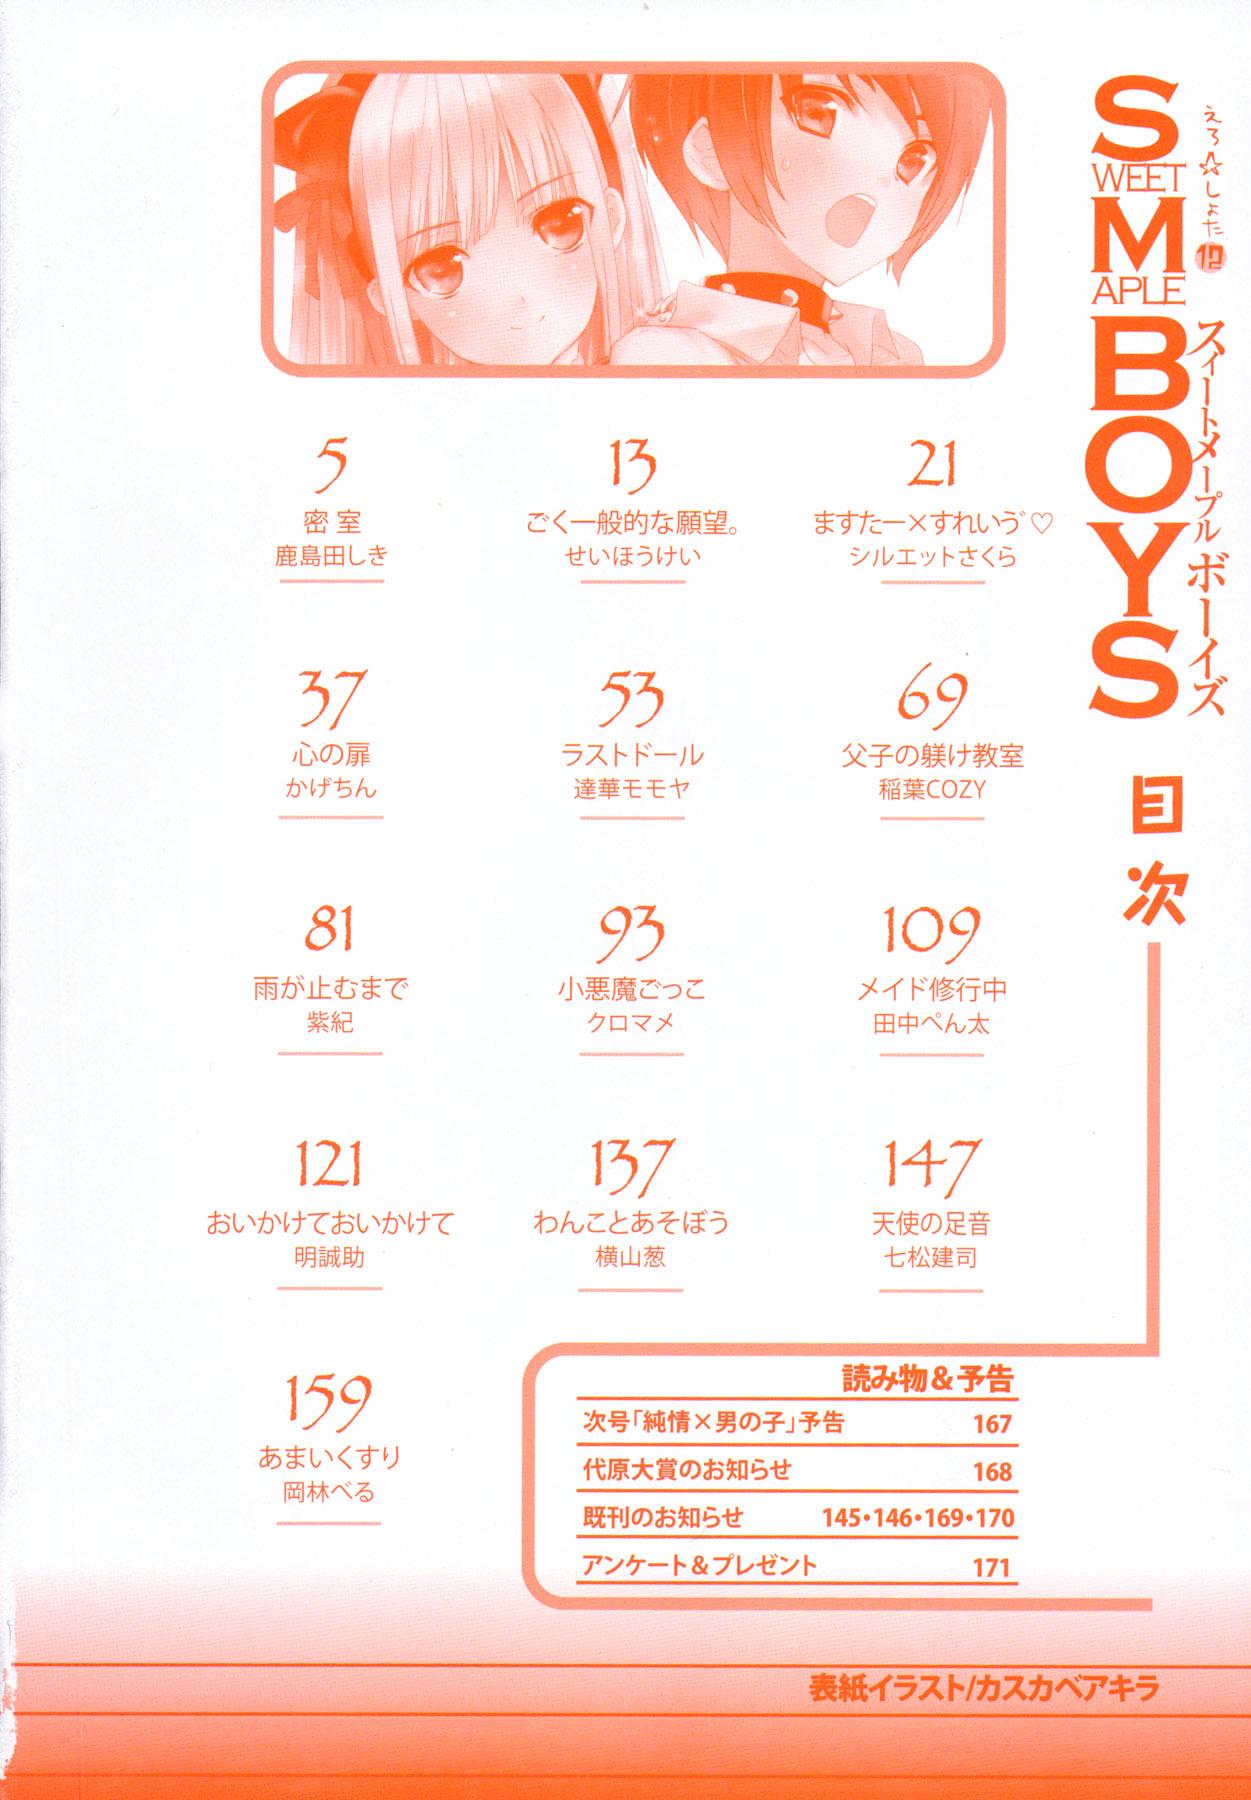 Gay Shorthair Ero Shota 12 - Sweet Maple Boys Groupsex - Page 3